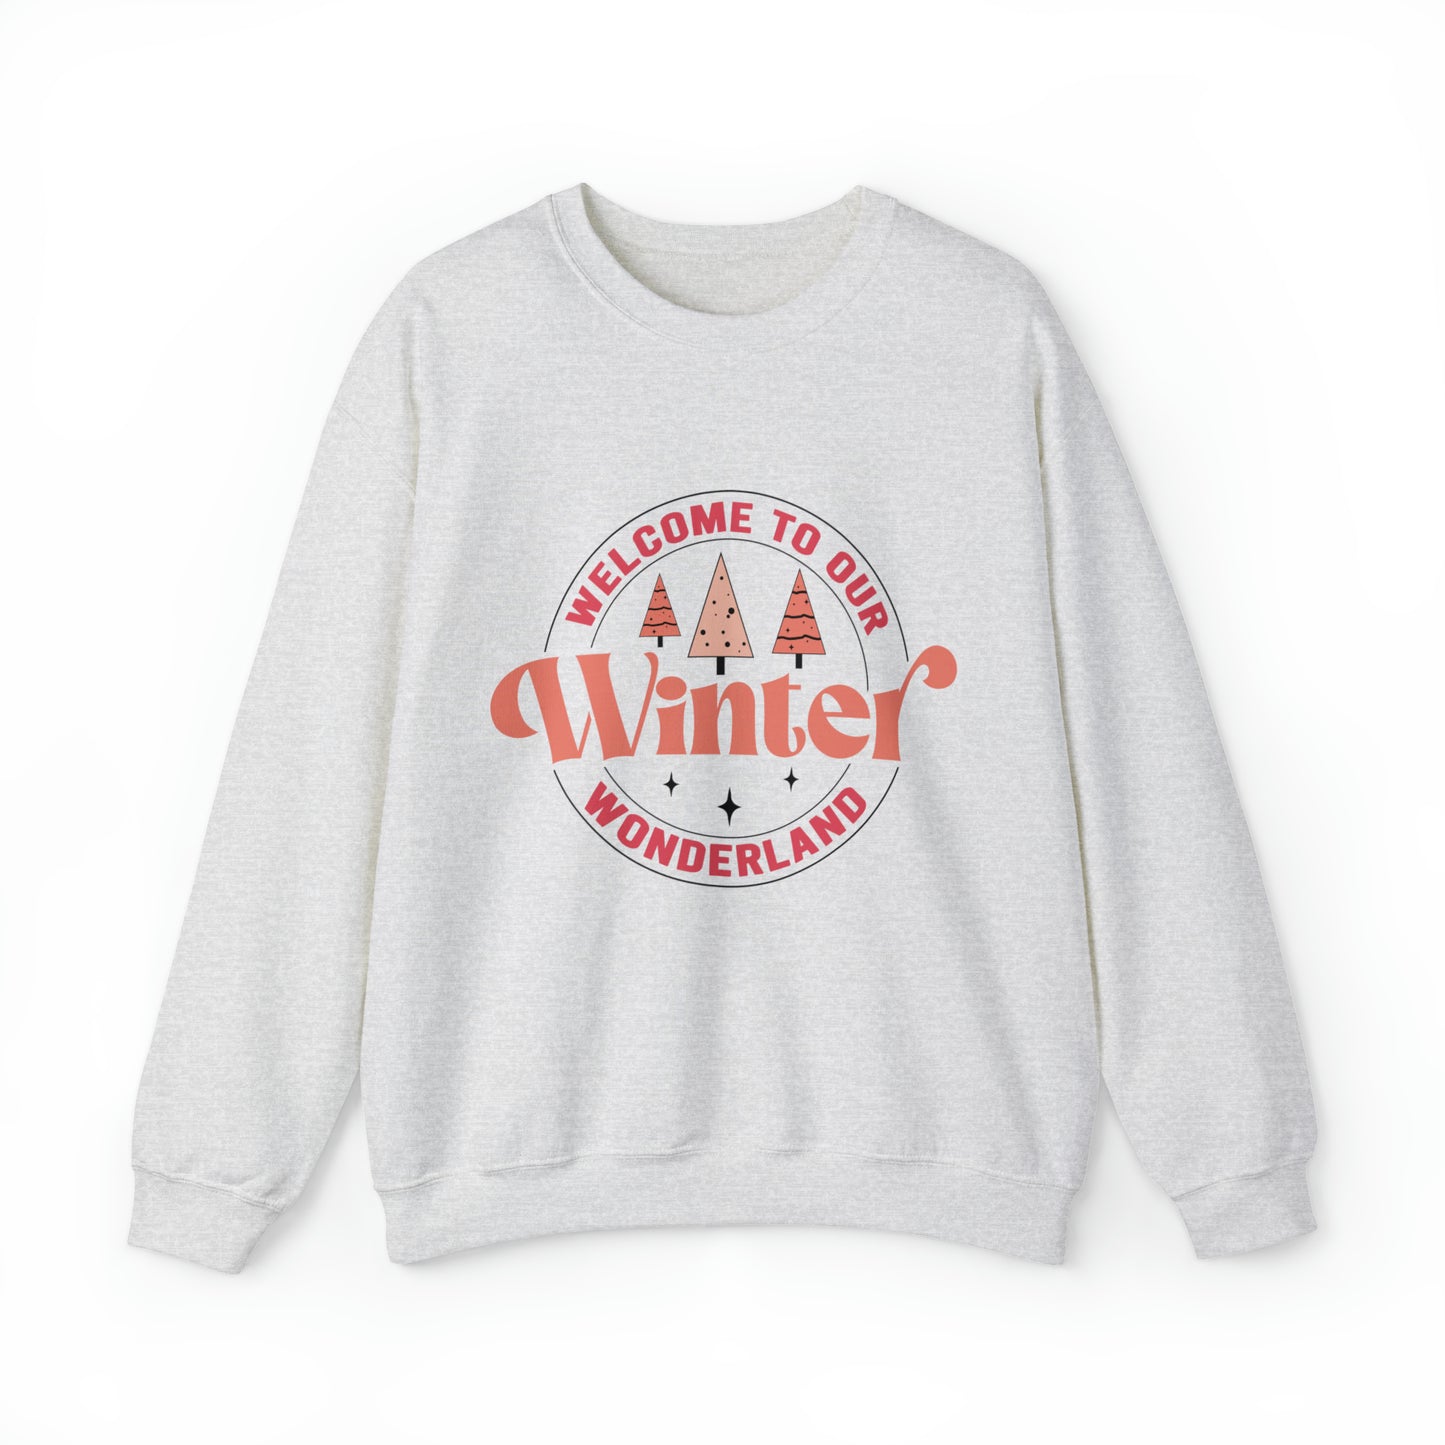 Welcome to our Winter Wonderland Women's Funny Christmas Crewneck Sweatshirt